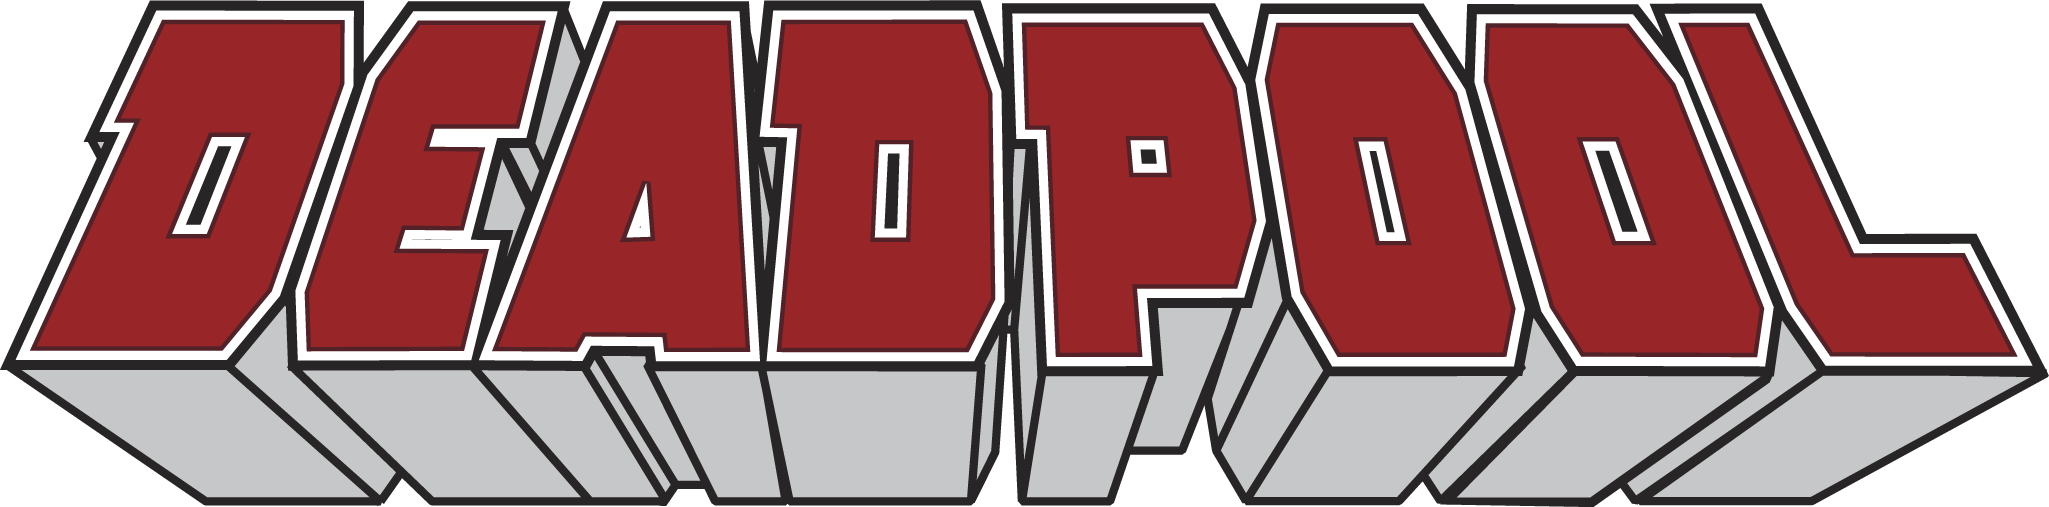 Offizieller Deadpool-Logo-Png-Bildhintergrund